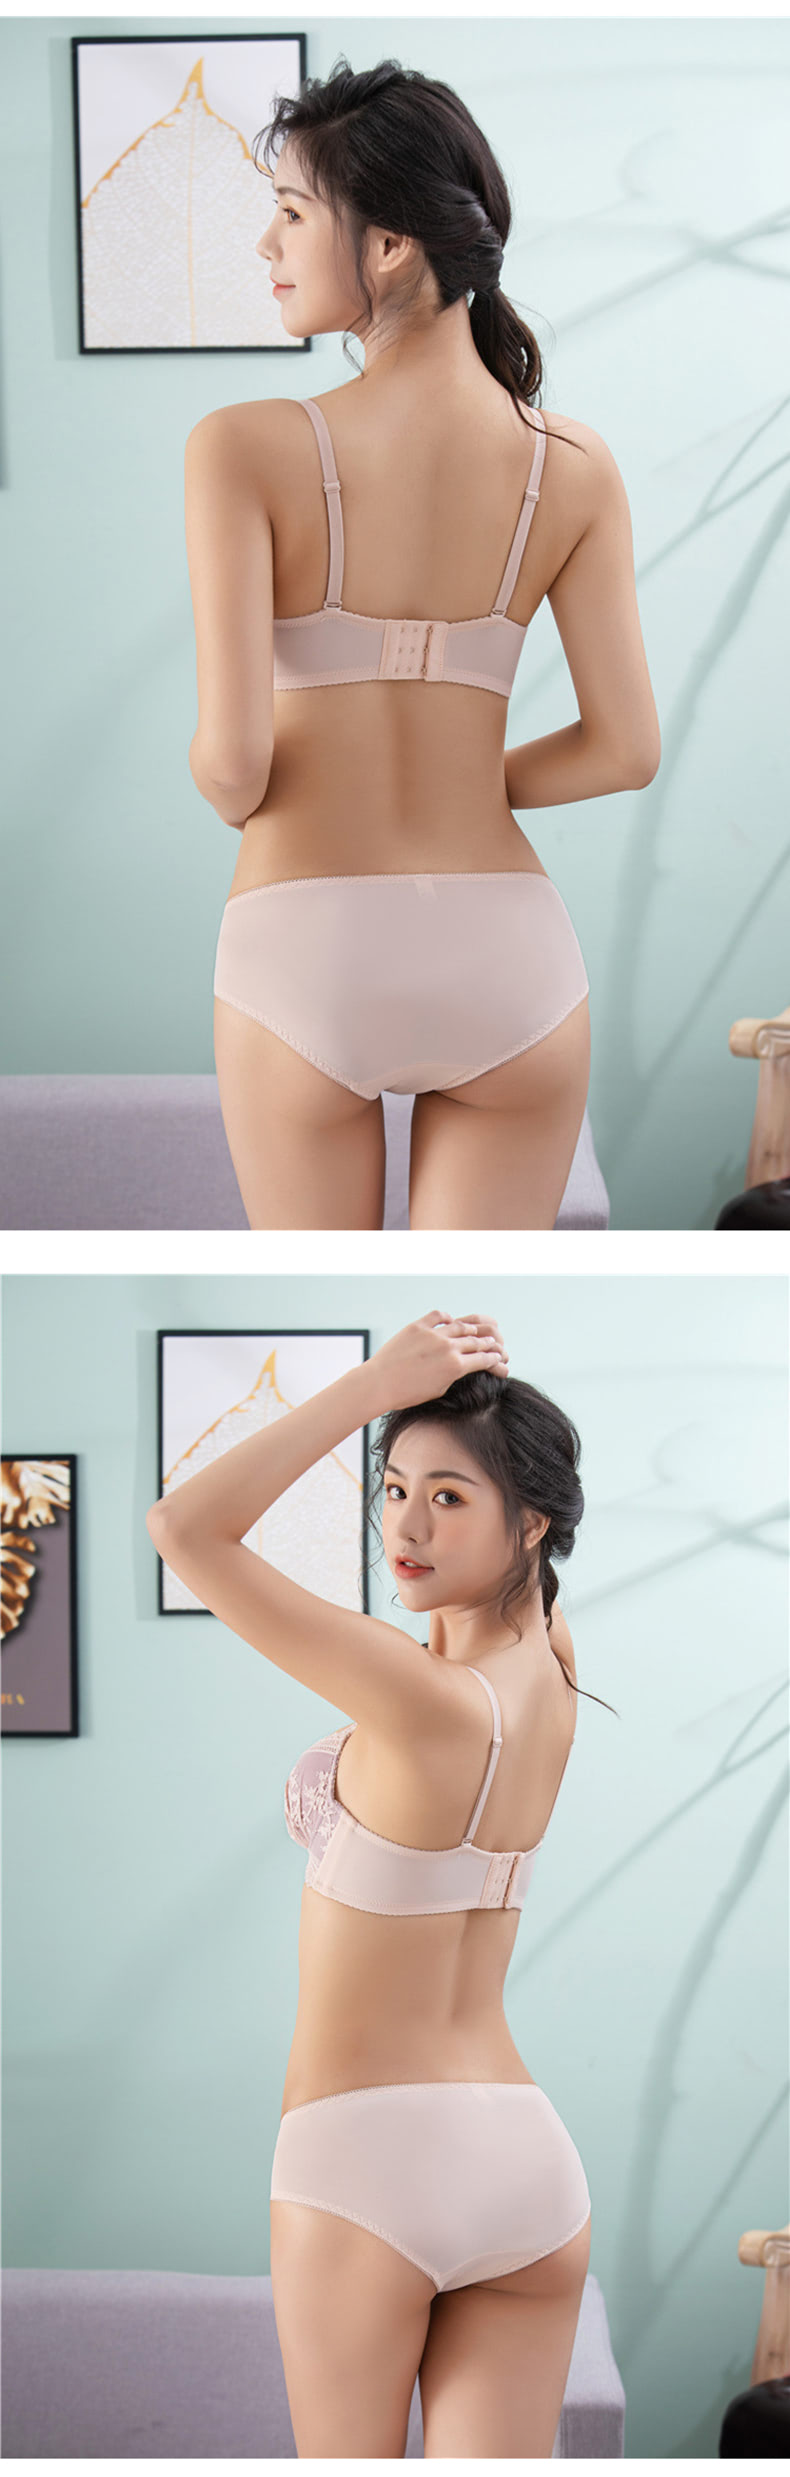 Soft-Lace-Bralette-Panty-Lingerie-Set-Everyday-Comfort-Underwear14.jpg